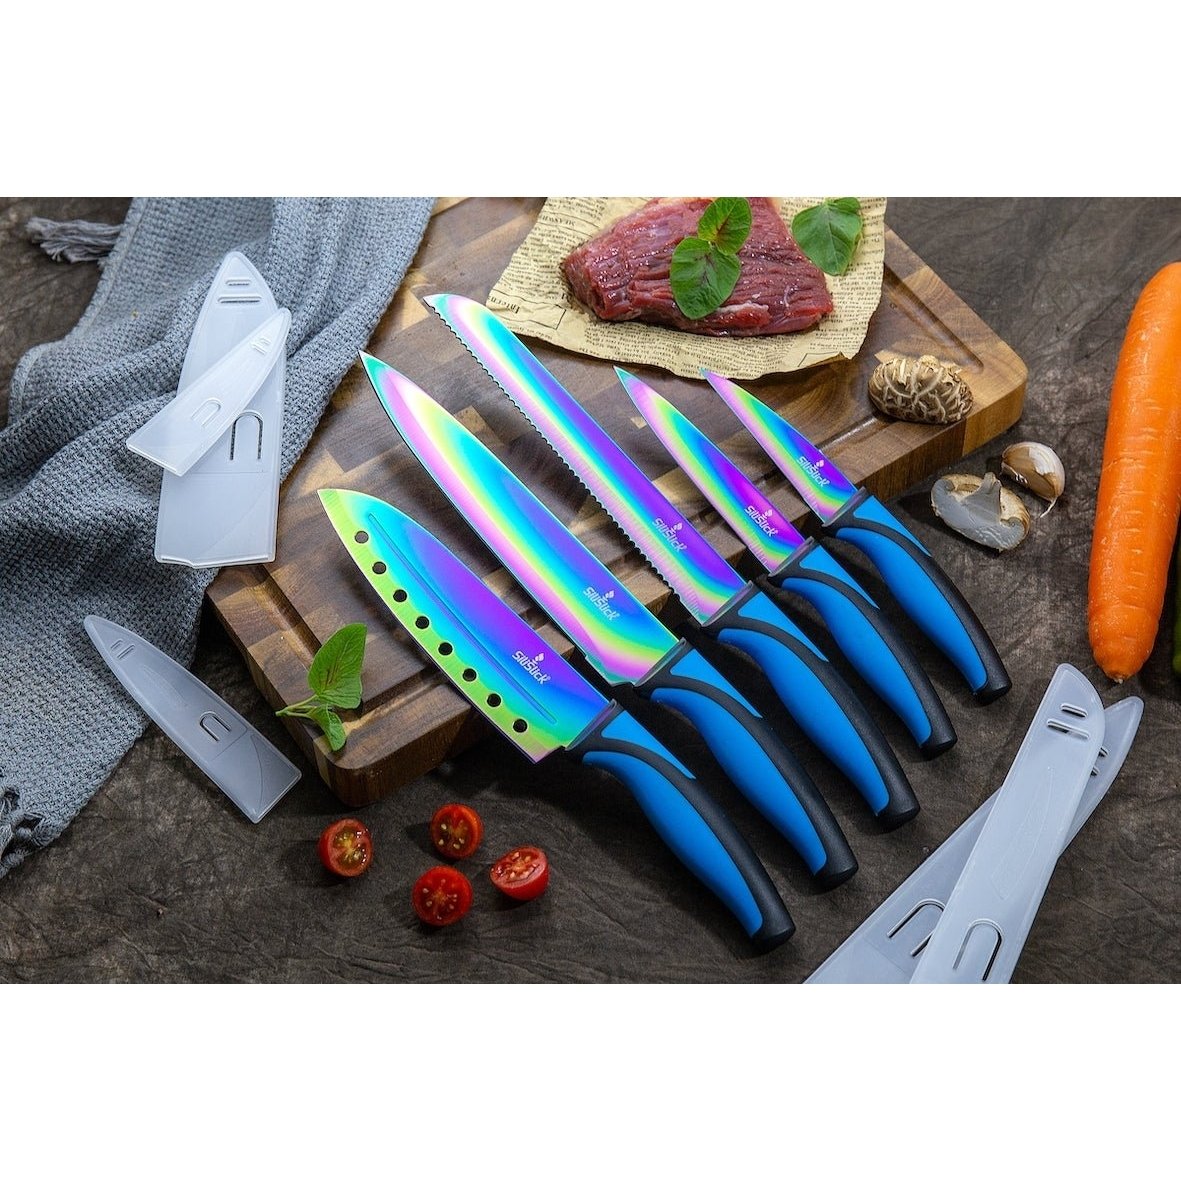 SiliSlick Stainless Steel Blue Handle Knife Set - Titanium Coated Stainless Steel Kitchen Utility Knife, Santoku, Bread, Chef, & Paring